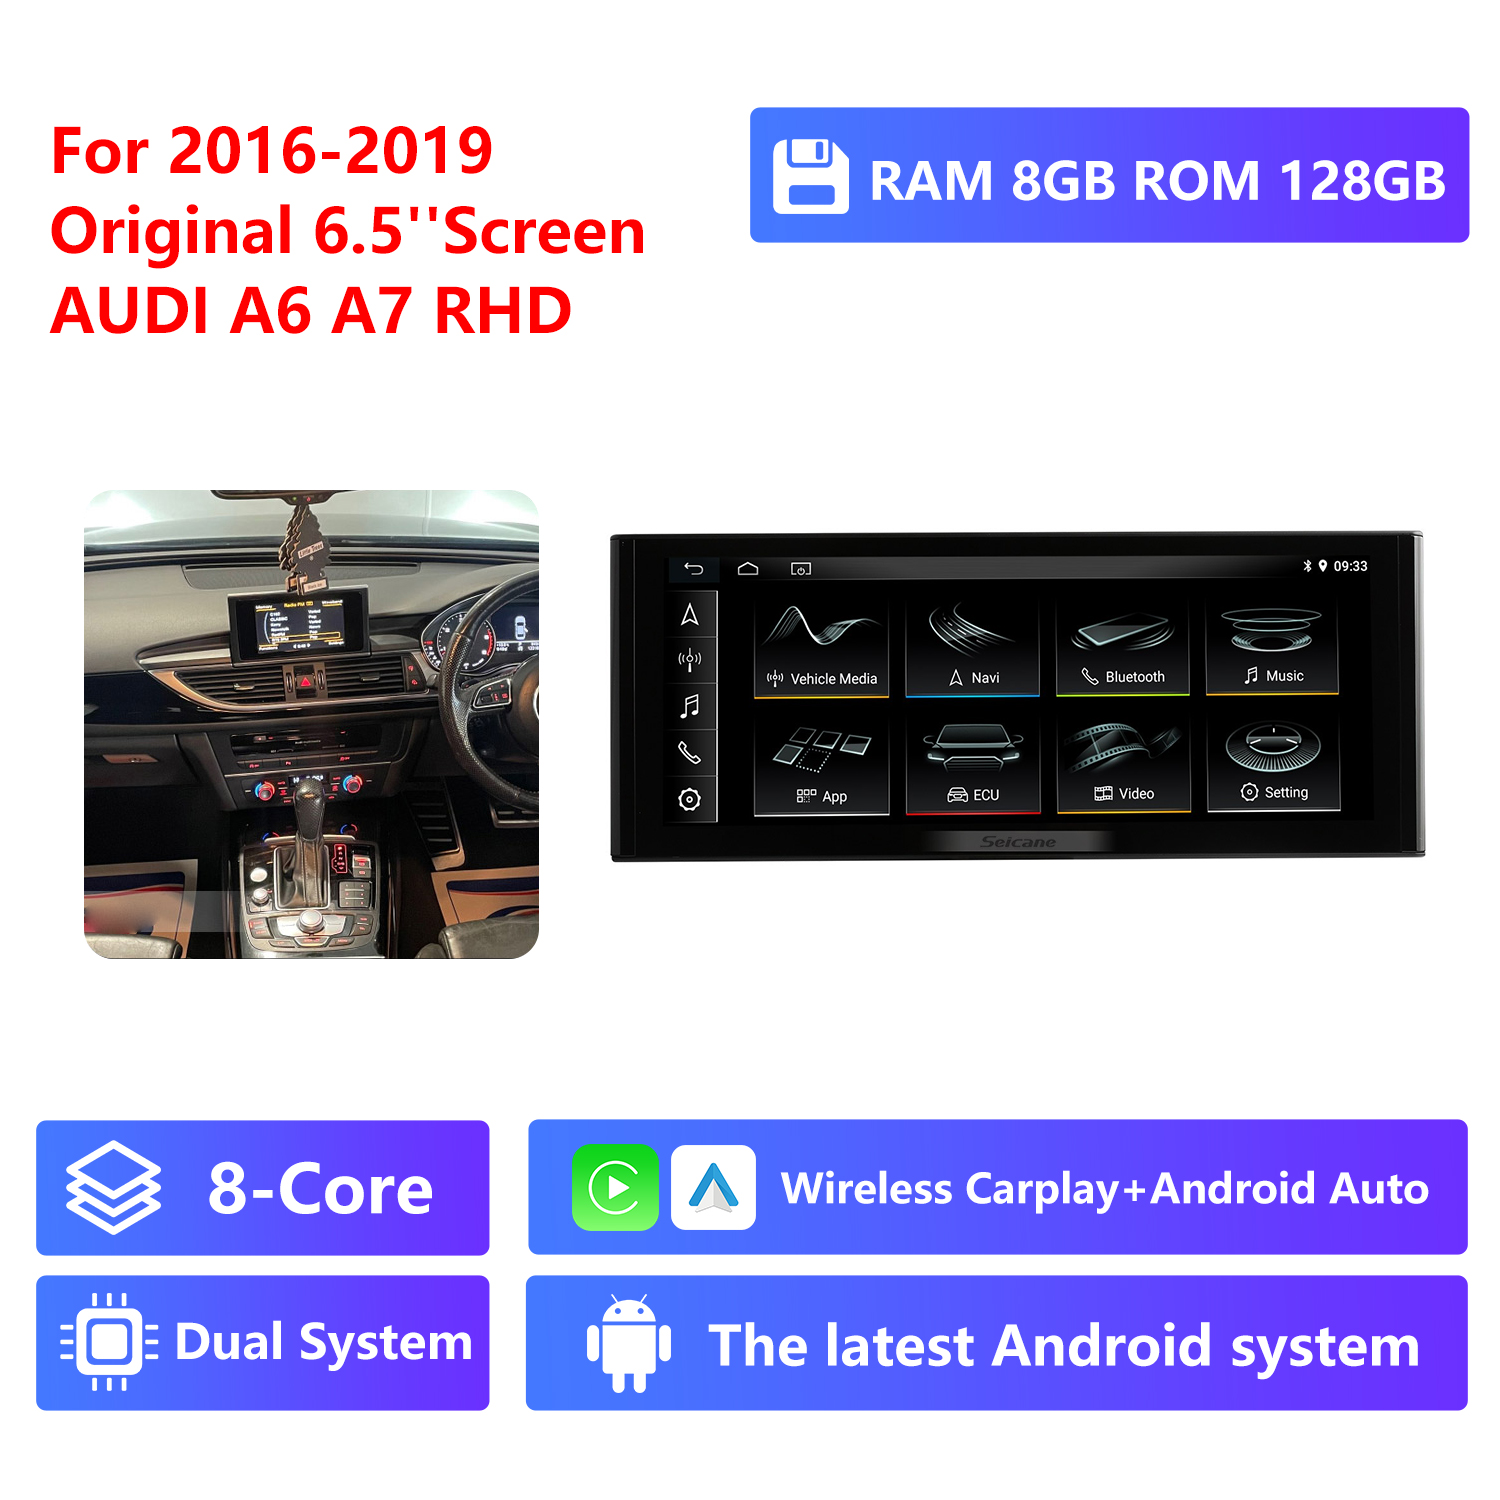 8-Core RAM 8G ROM 128G,2016-2019, Original 6.5"Screen,RHD